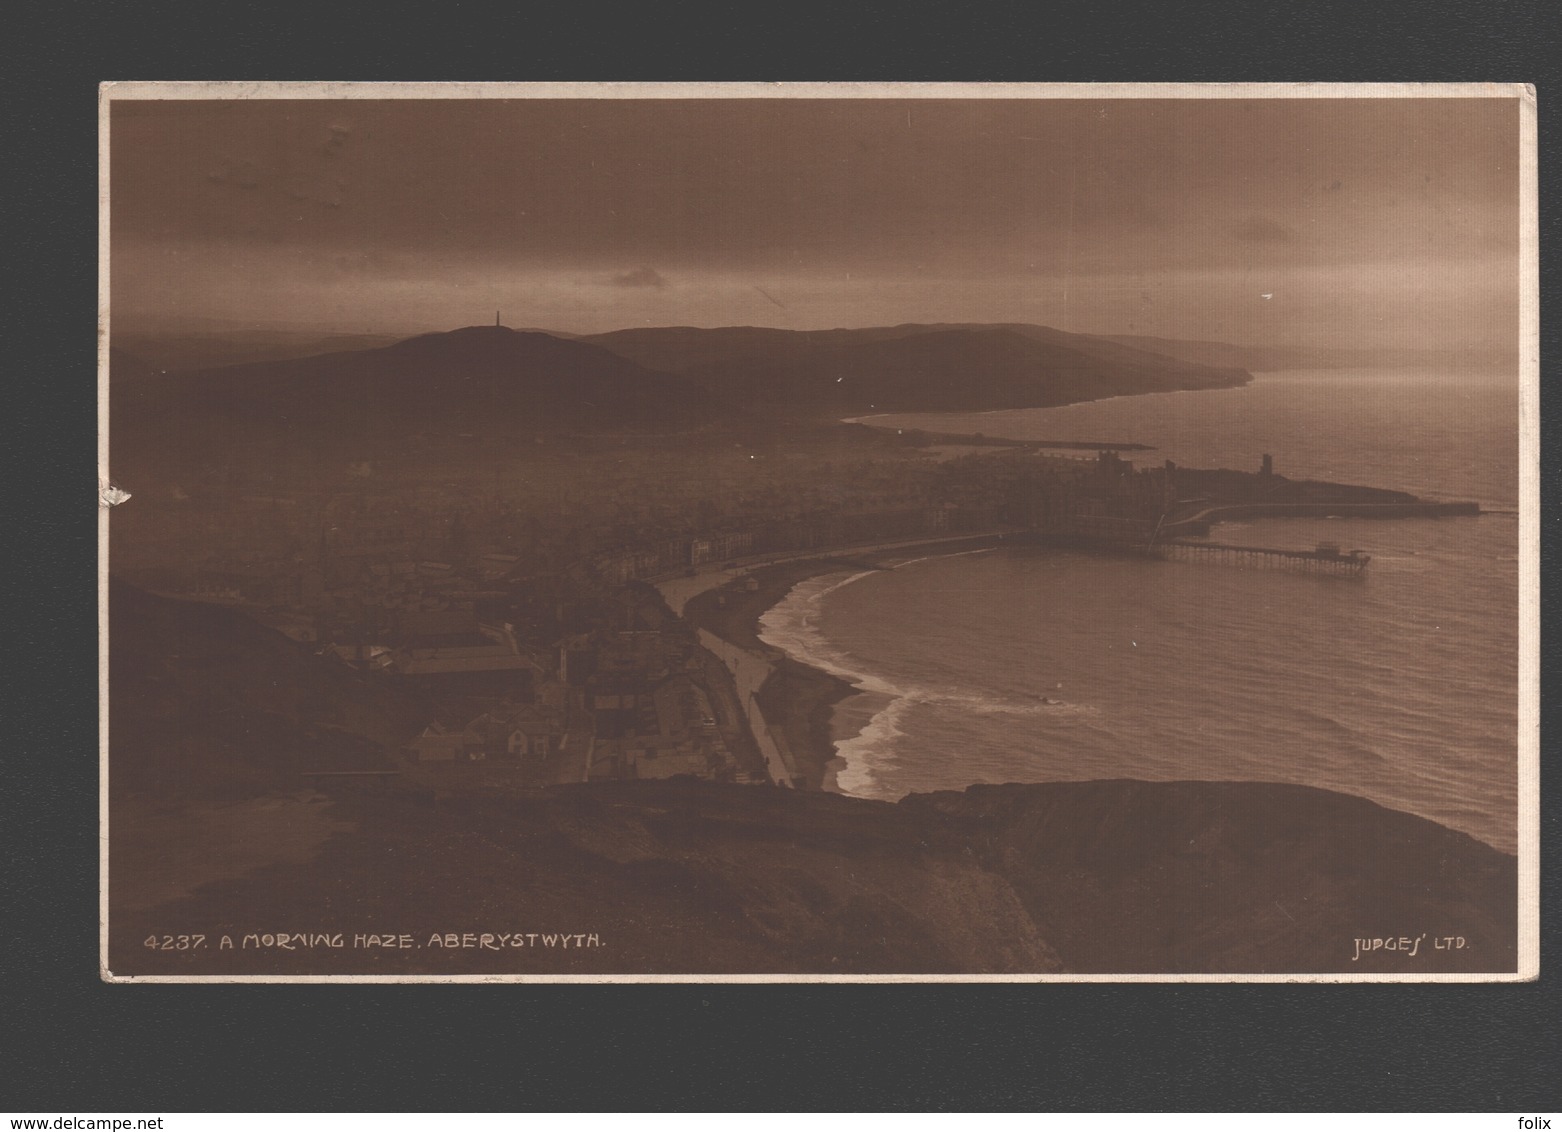 Aberystwyth - A Morning Haze - Photo Card - 1917 - Cardiganshire